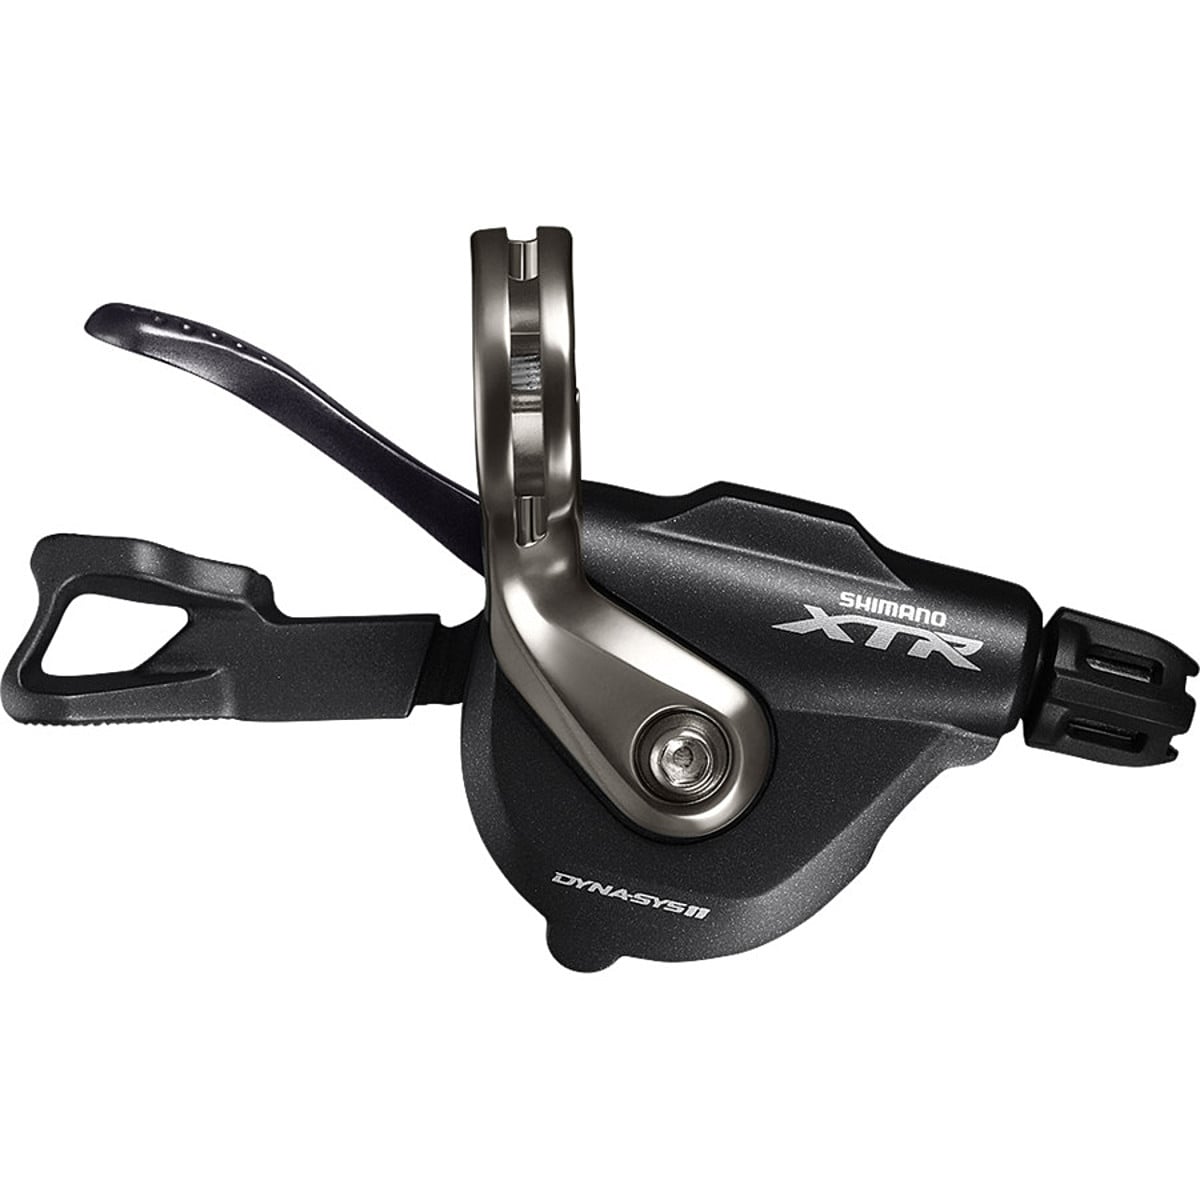 Shimano XTR SL-M9000 Trigger Shifters